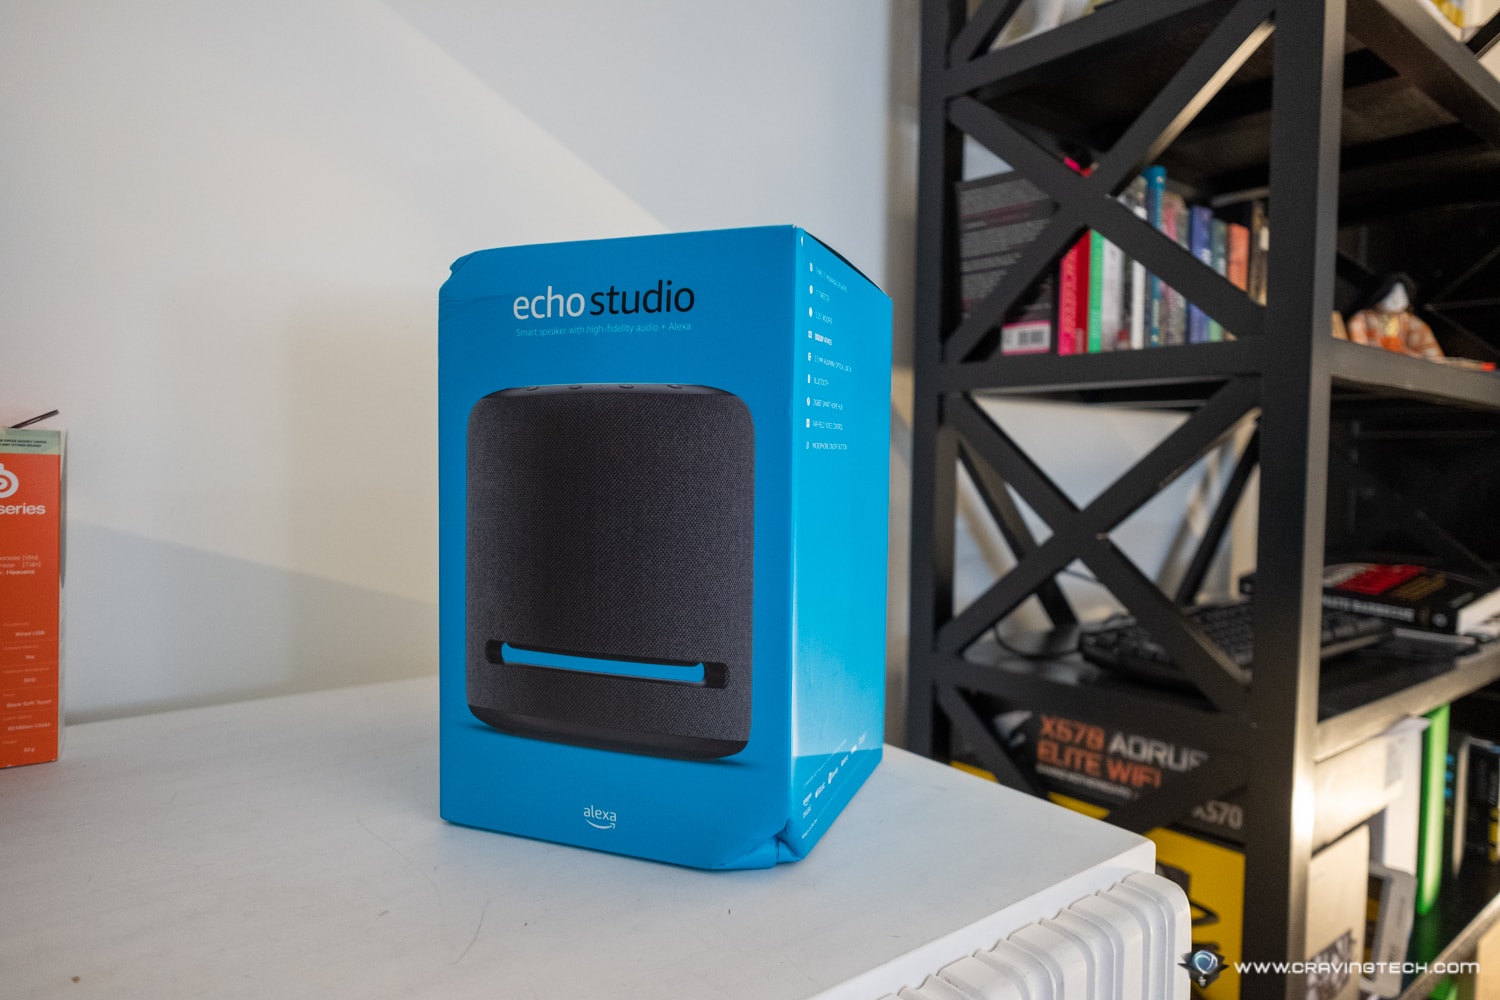 Introducing Echo StudioHigh-fidelity smart speaker with 3D audio and Alexa 